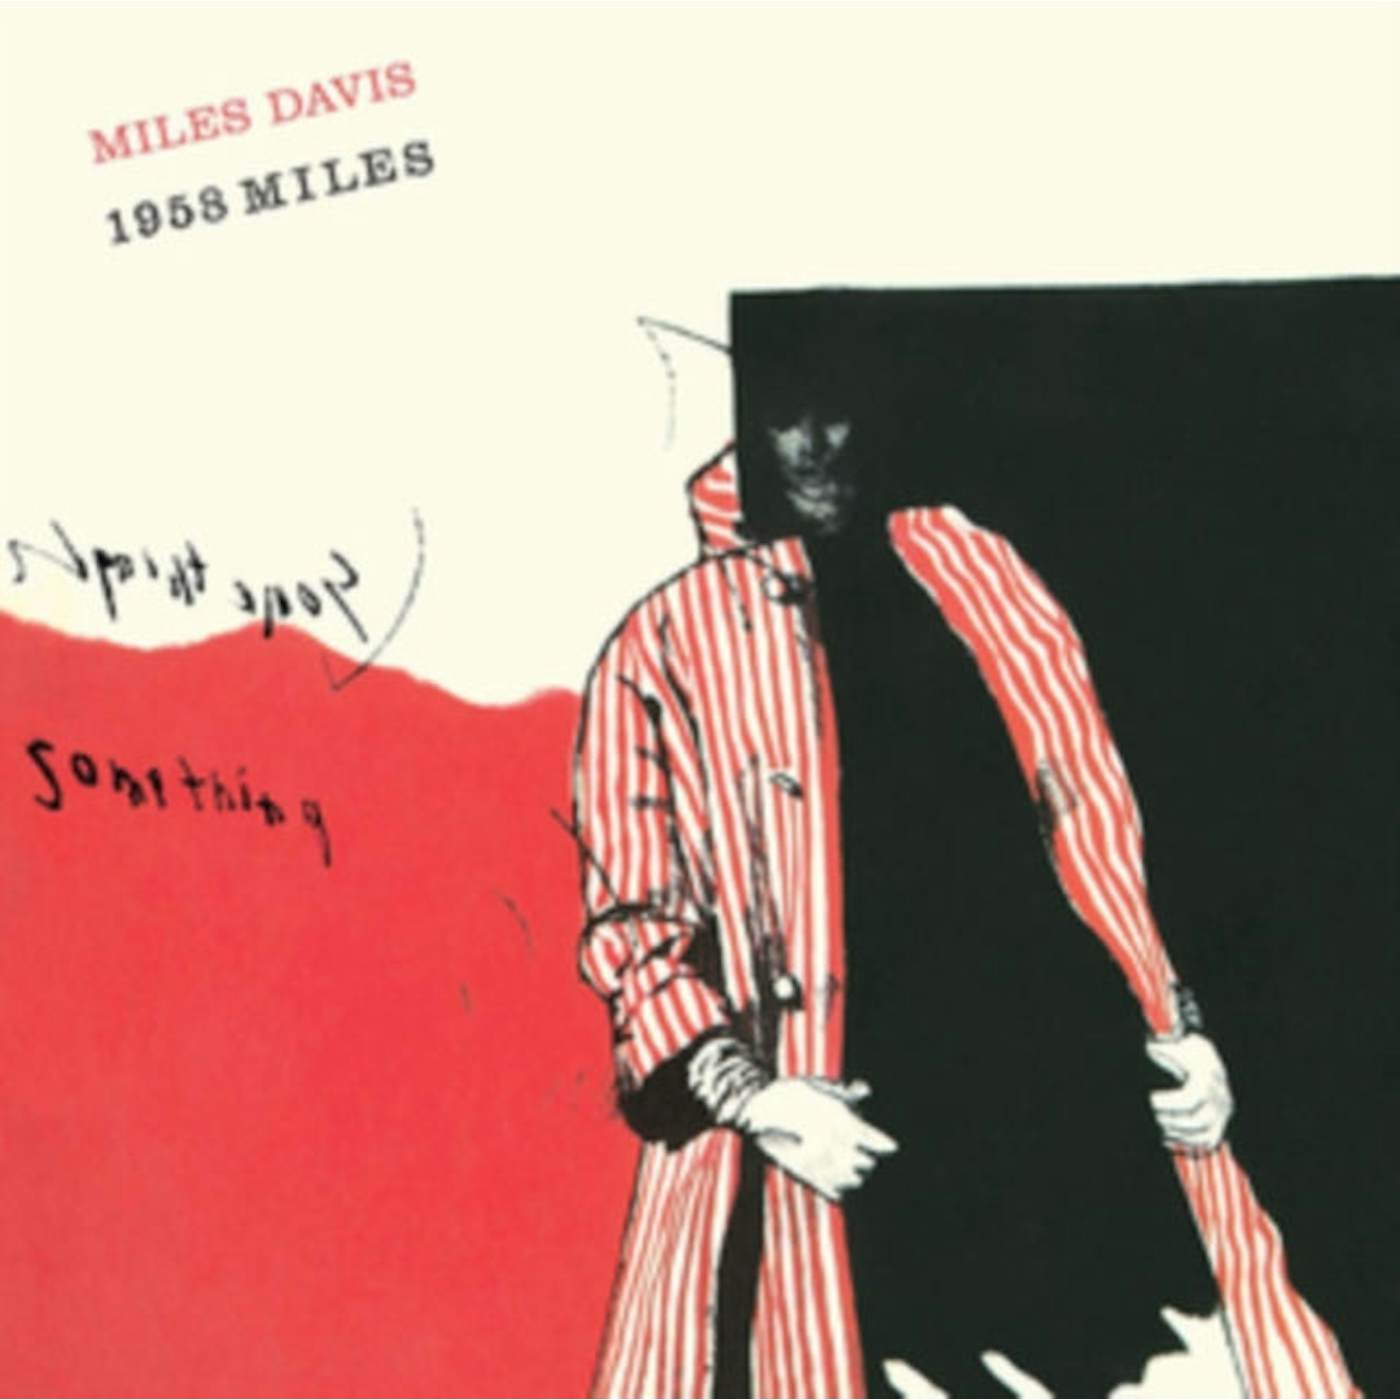 Miles Davis LP Vinyl Record  19 58 Miles (Limited Transparent Red Vinyl)